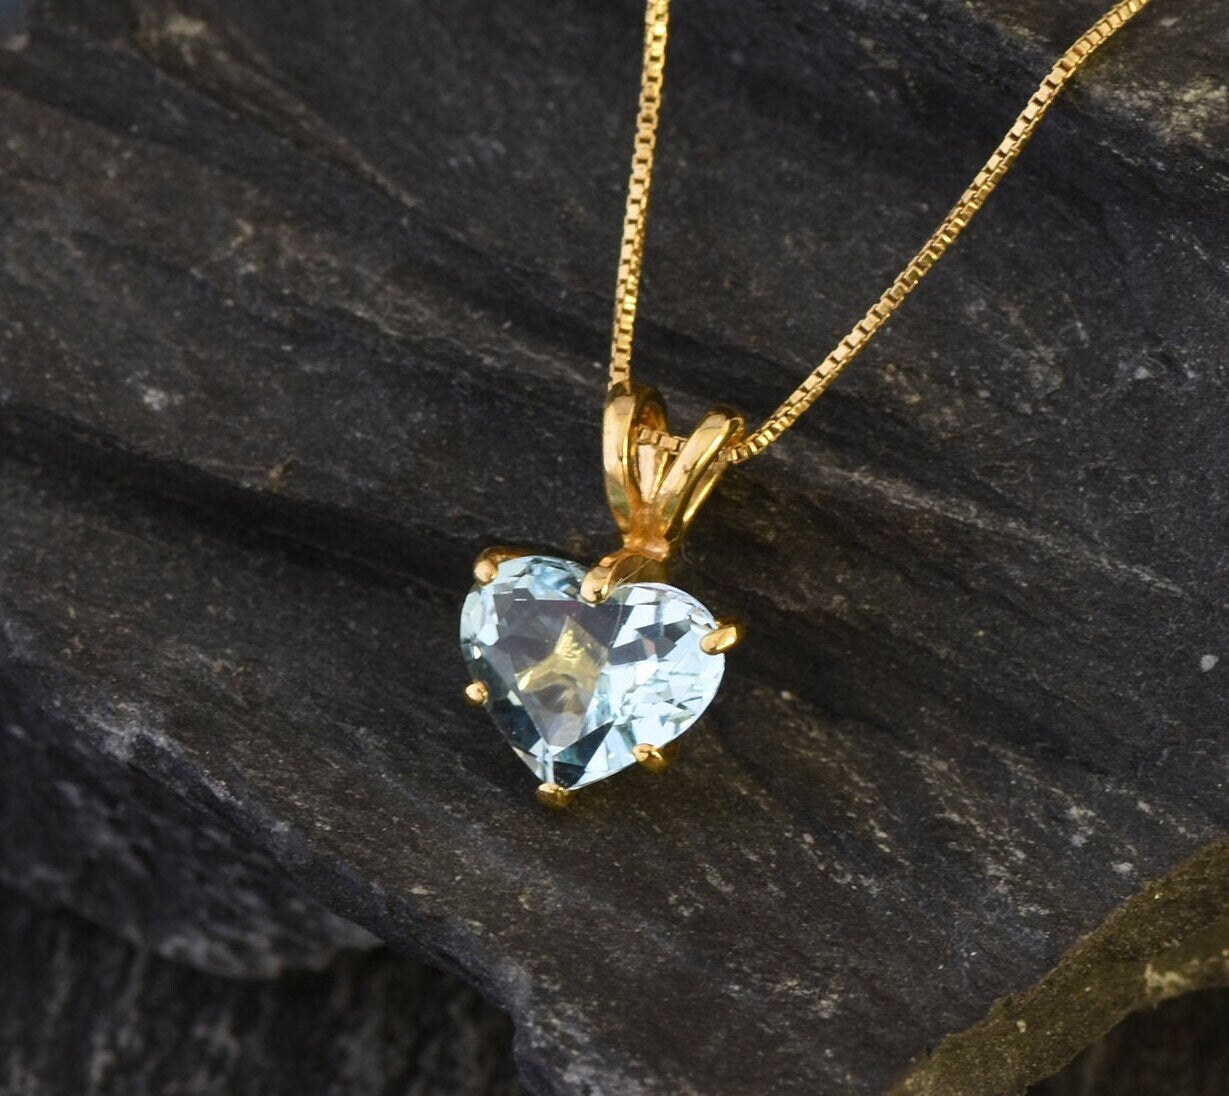 Blue Heart Pendant - Natural Blue Topaz, December Birthstone, Love Necklace